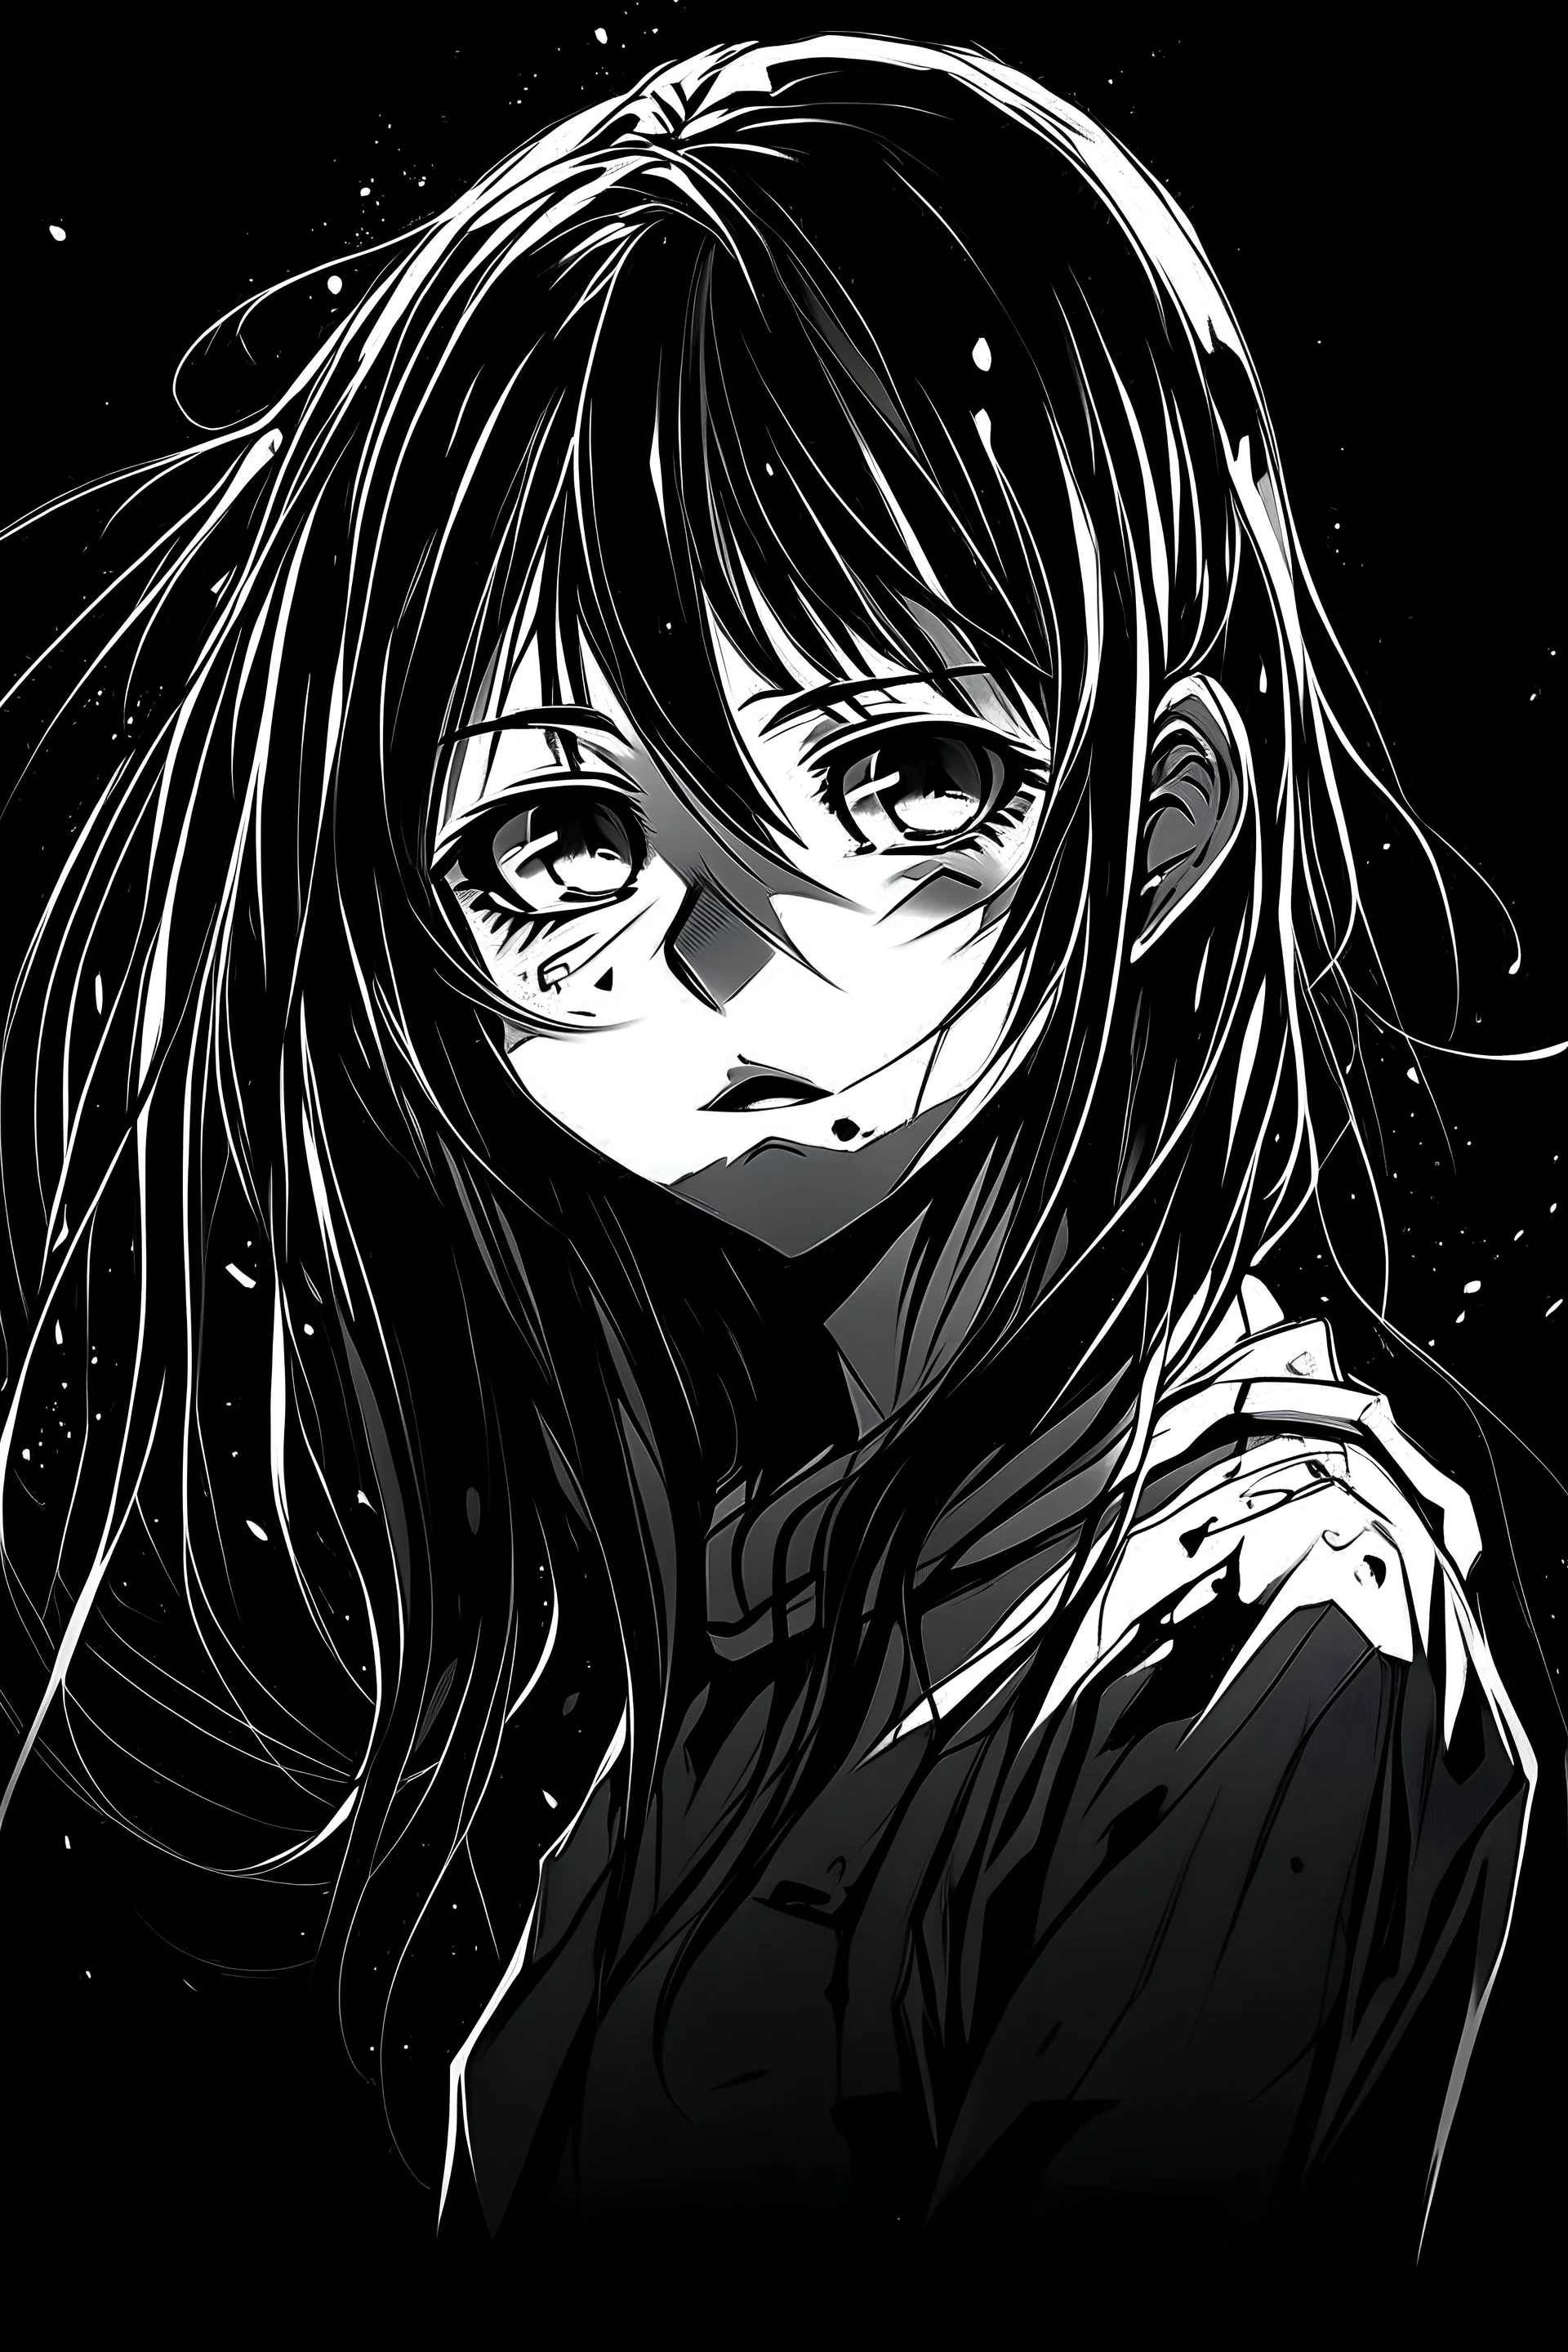 Disfigured anime girl in white and black background, cool aesthetic manga illustration, distorted anime girls, broken sad anime girls, teen anime girls, breakcore, sleep deprived, with eyebags